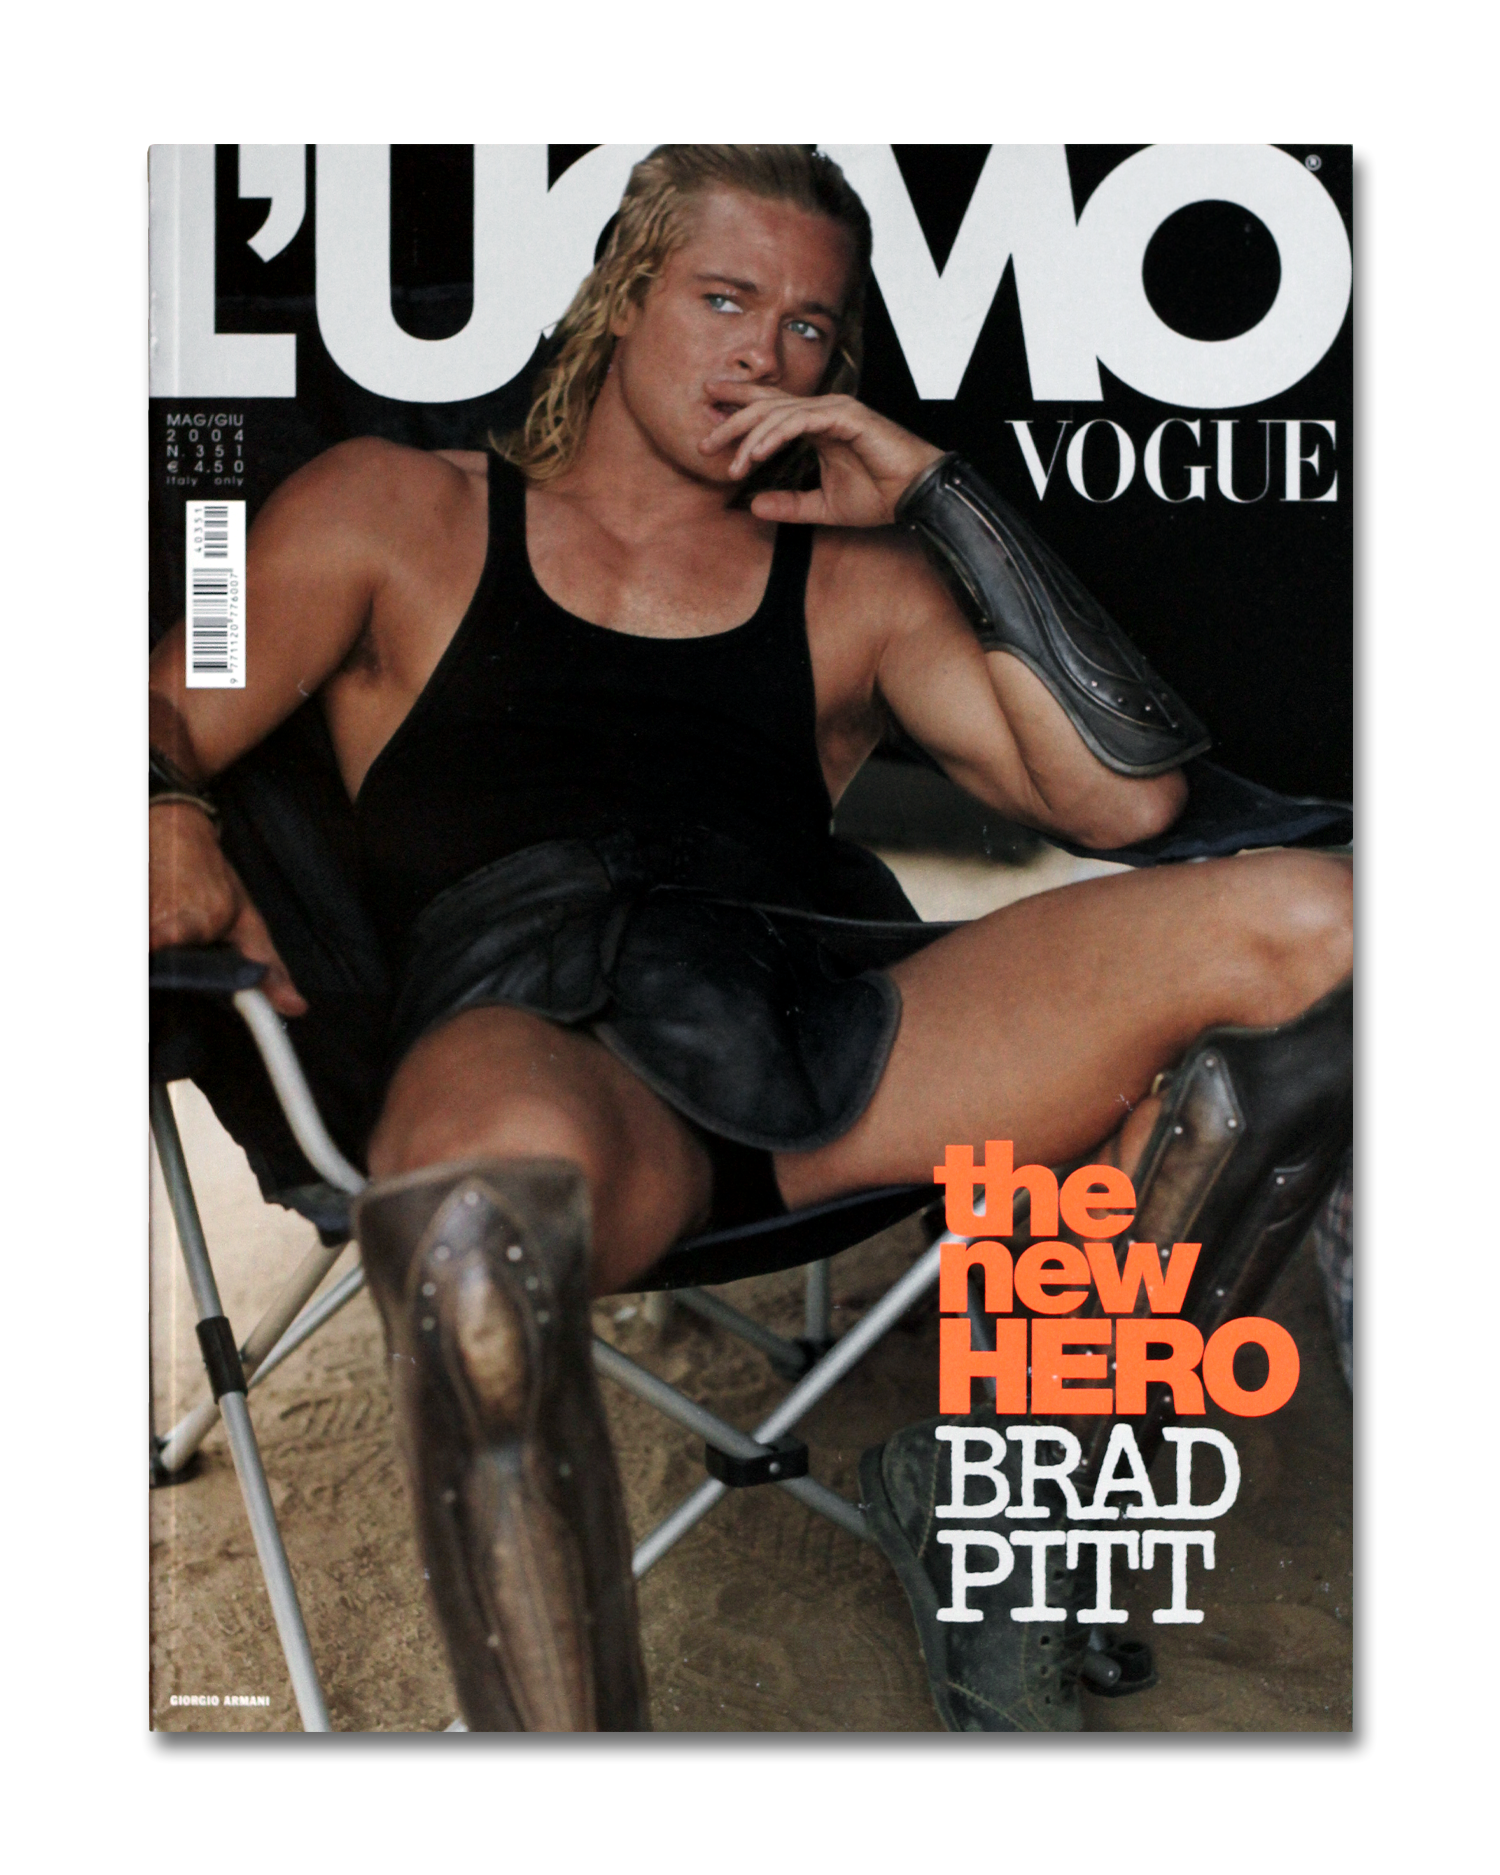 L'Uomo Vogue, May/June 2004<BR>Brad Pitt by Steven Klein